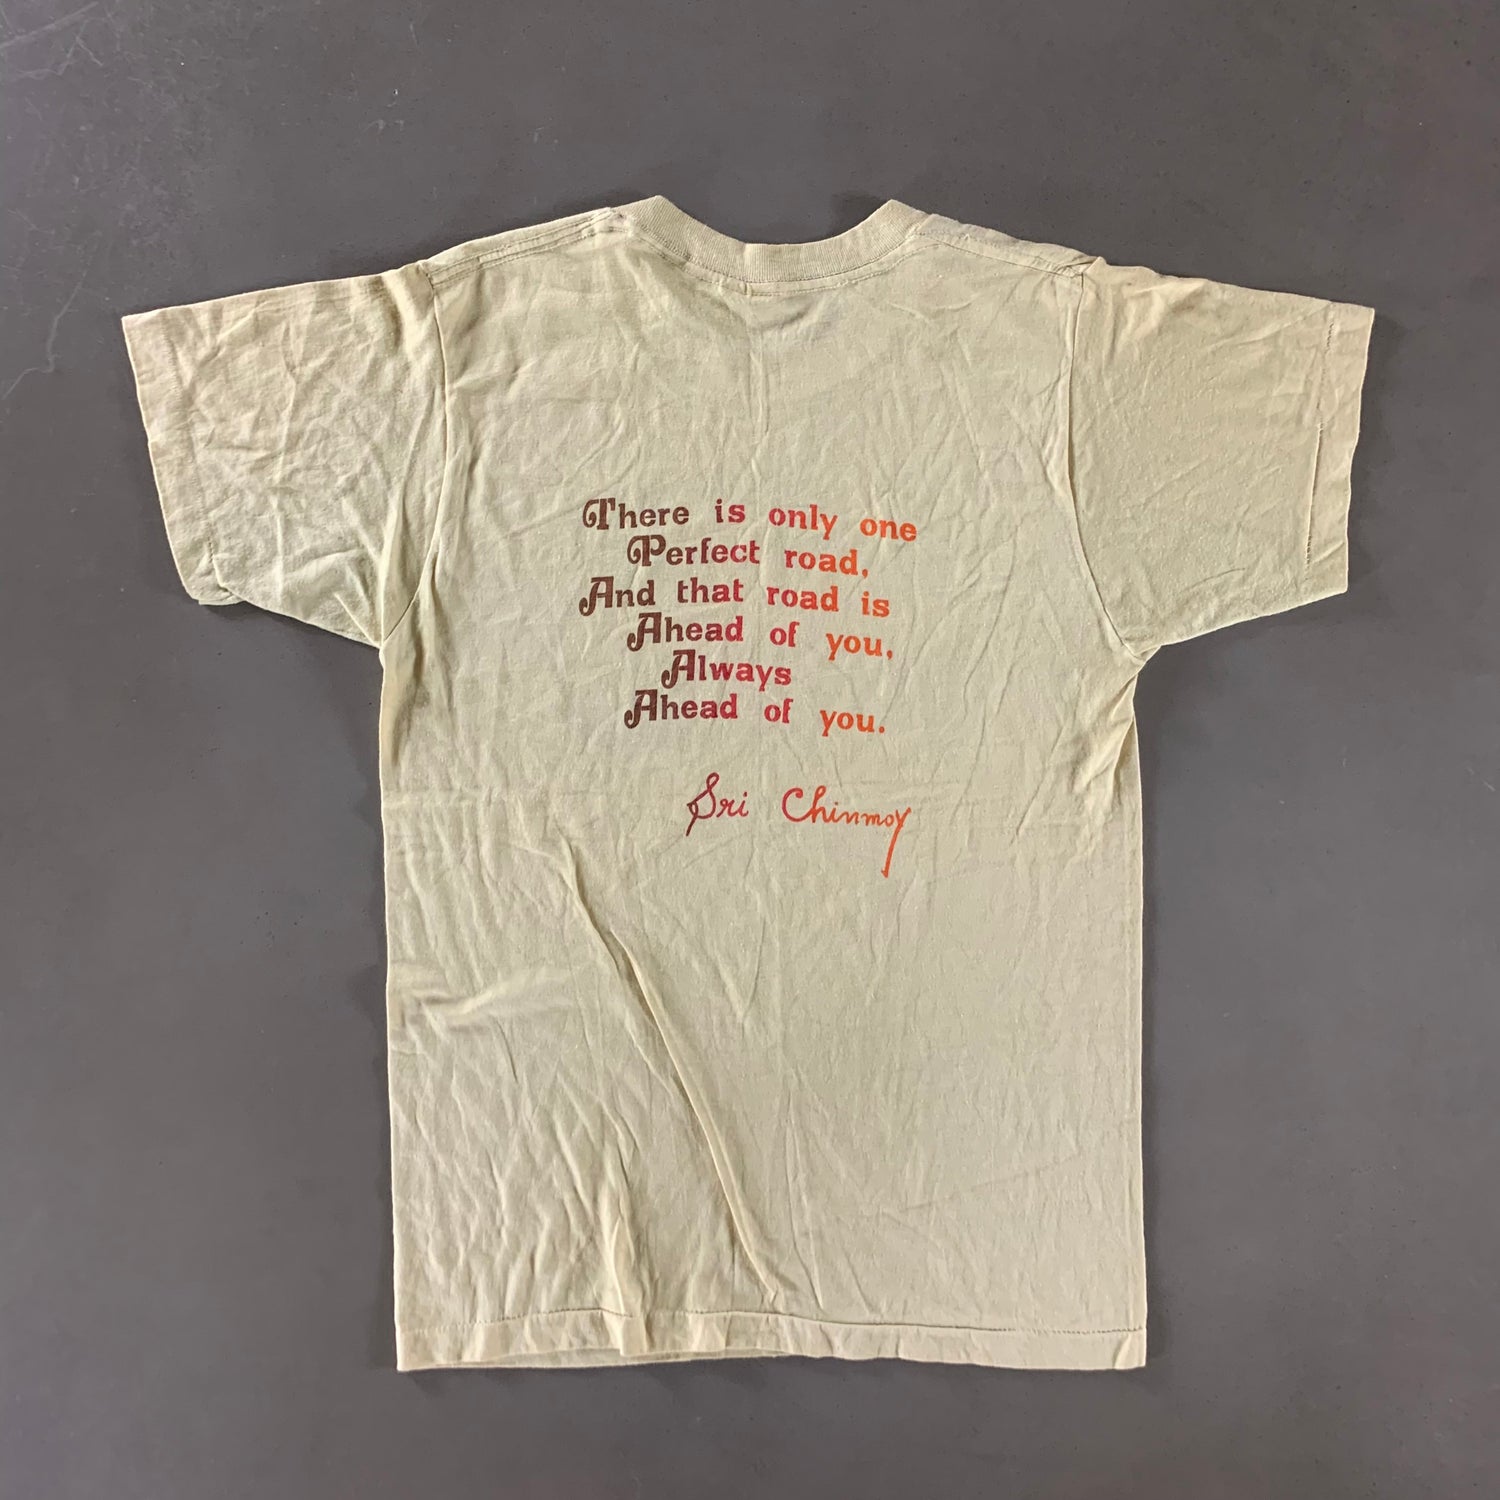 Vintage 1980s Marathon T-shirt size Medium